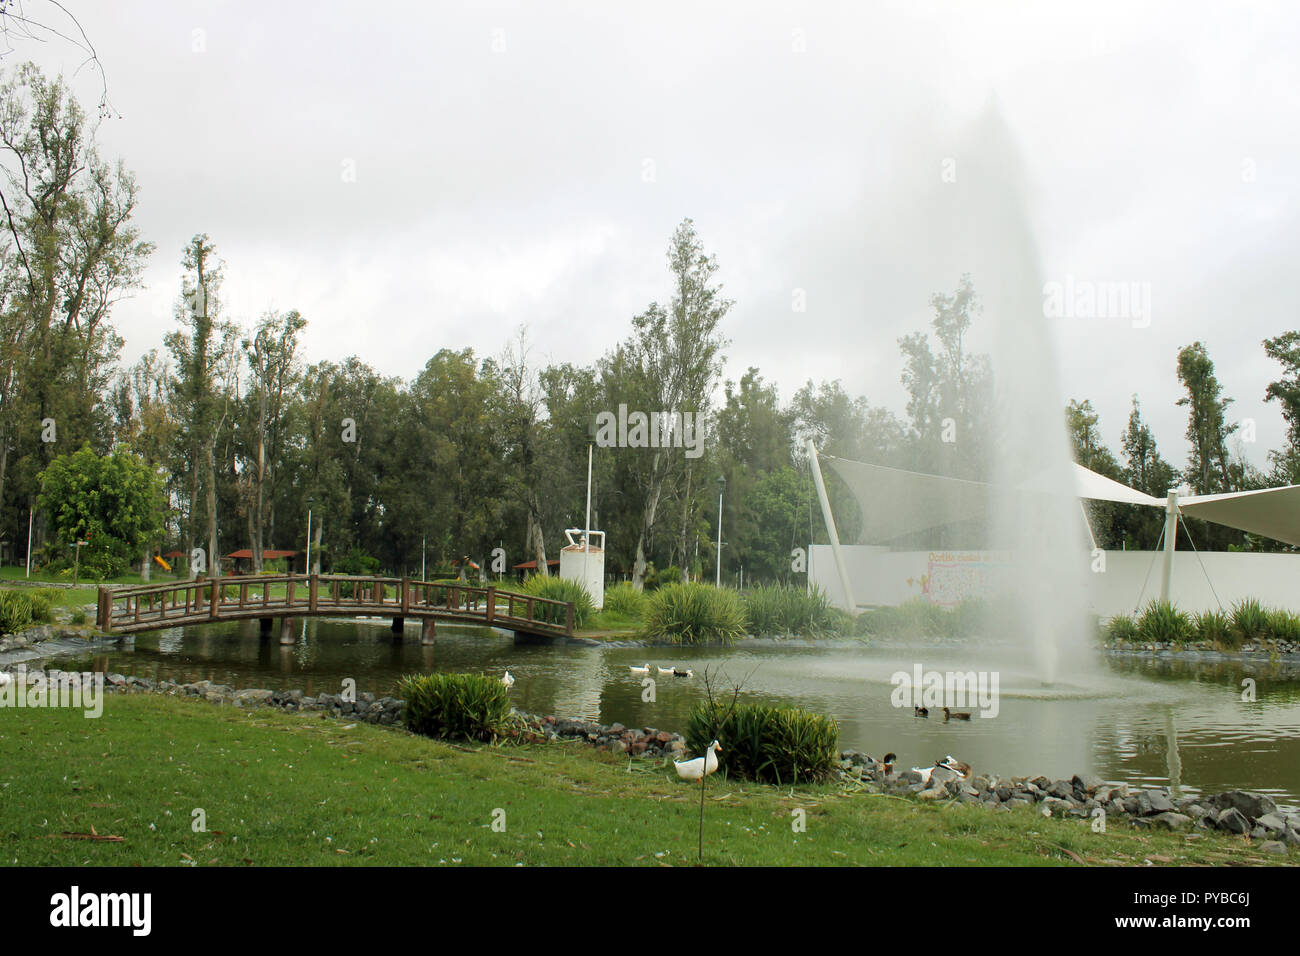 Una mañana nublada en un parque familiariser Banque D'Images